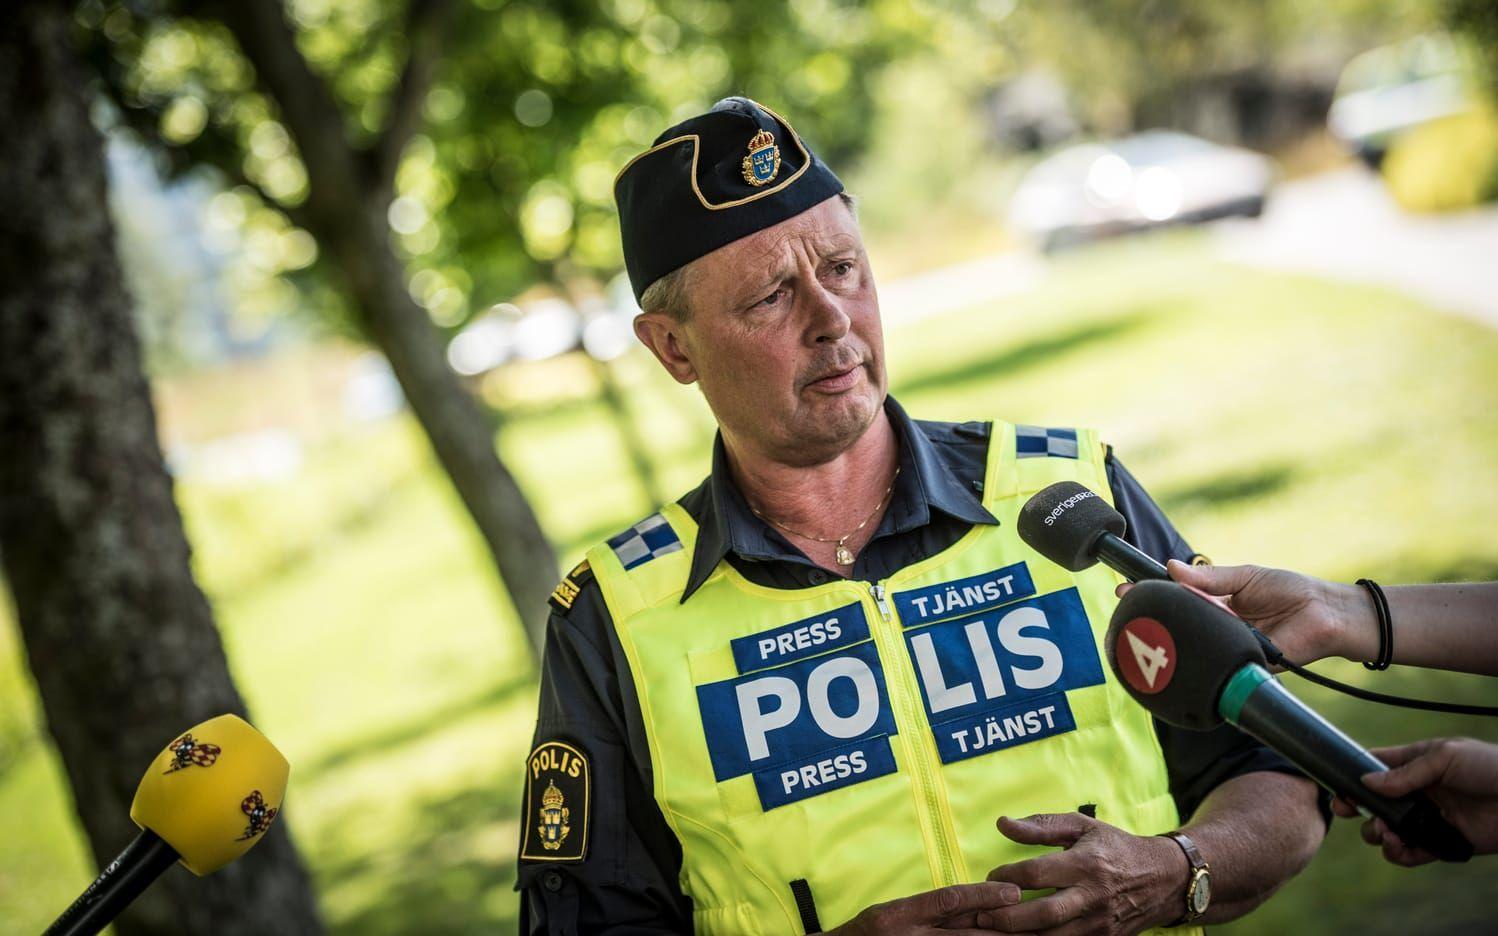 Bild: GP / Olof Ohlsson.
